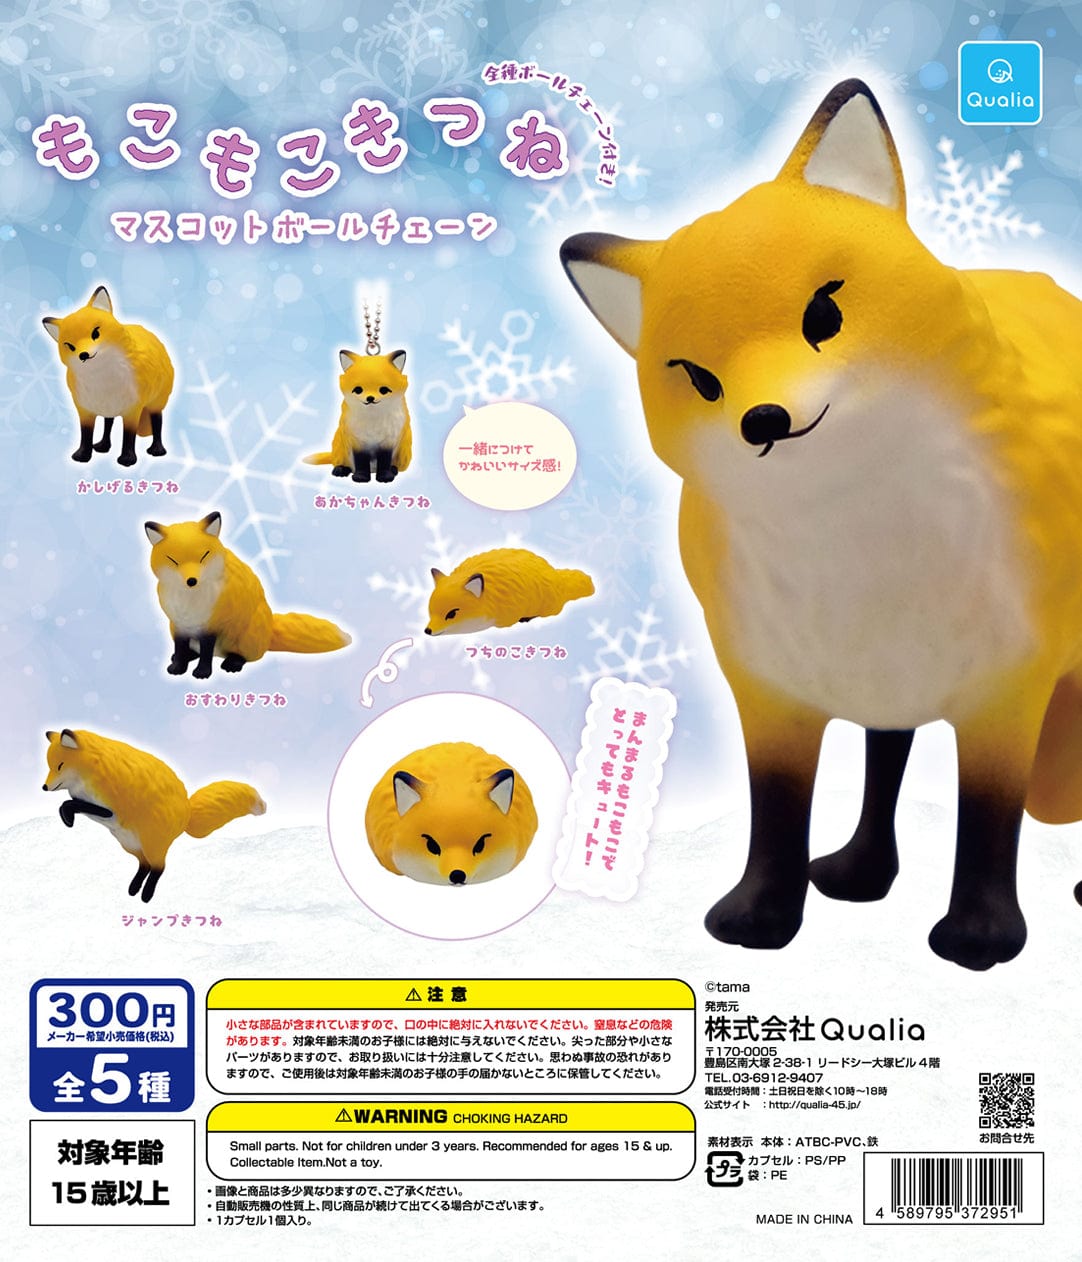 Qualia CP1174 Mokomoko Fox Mascot Ball Chain